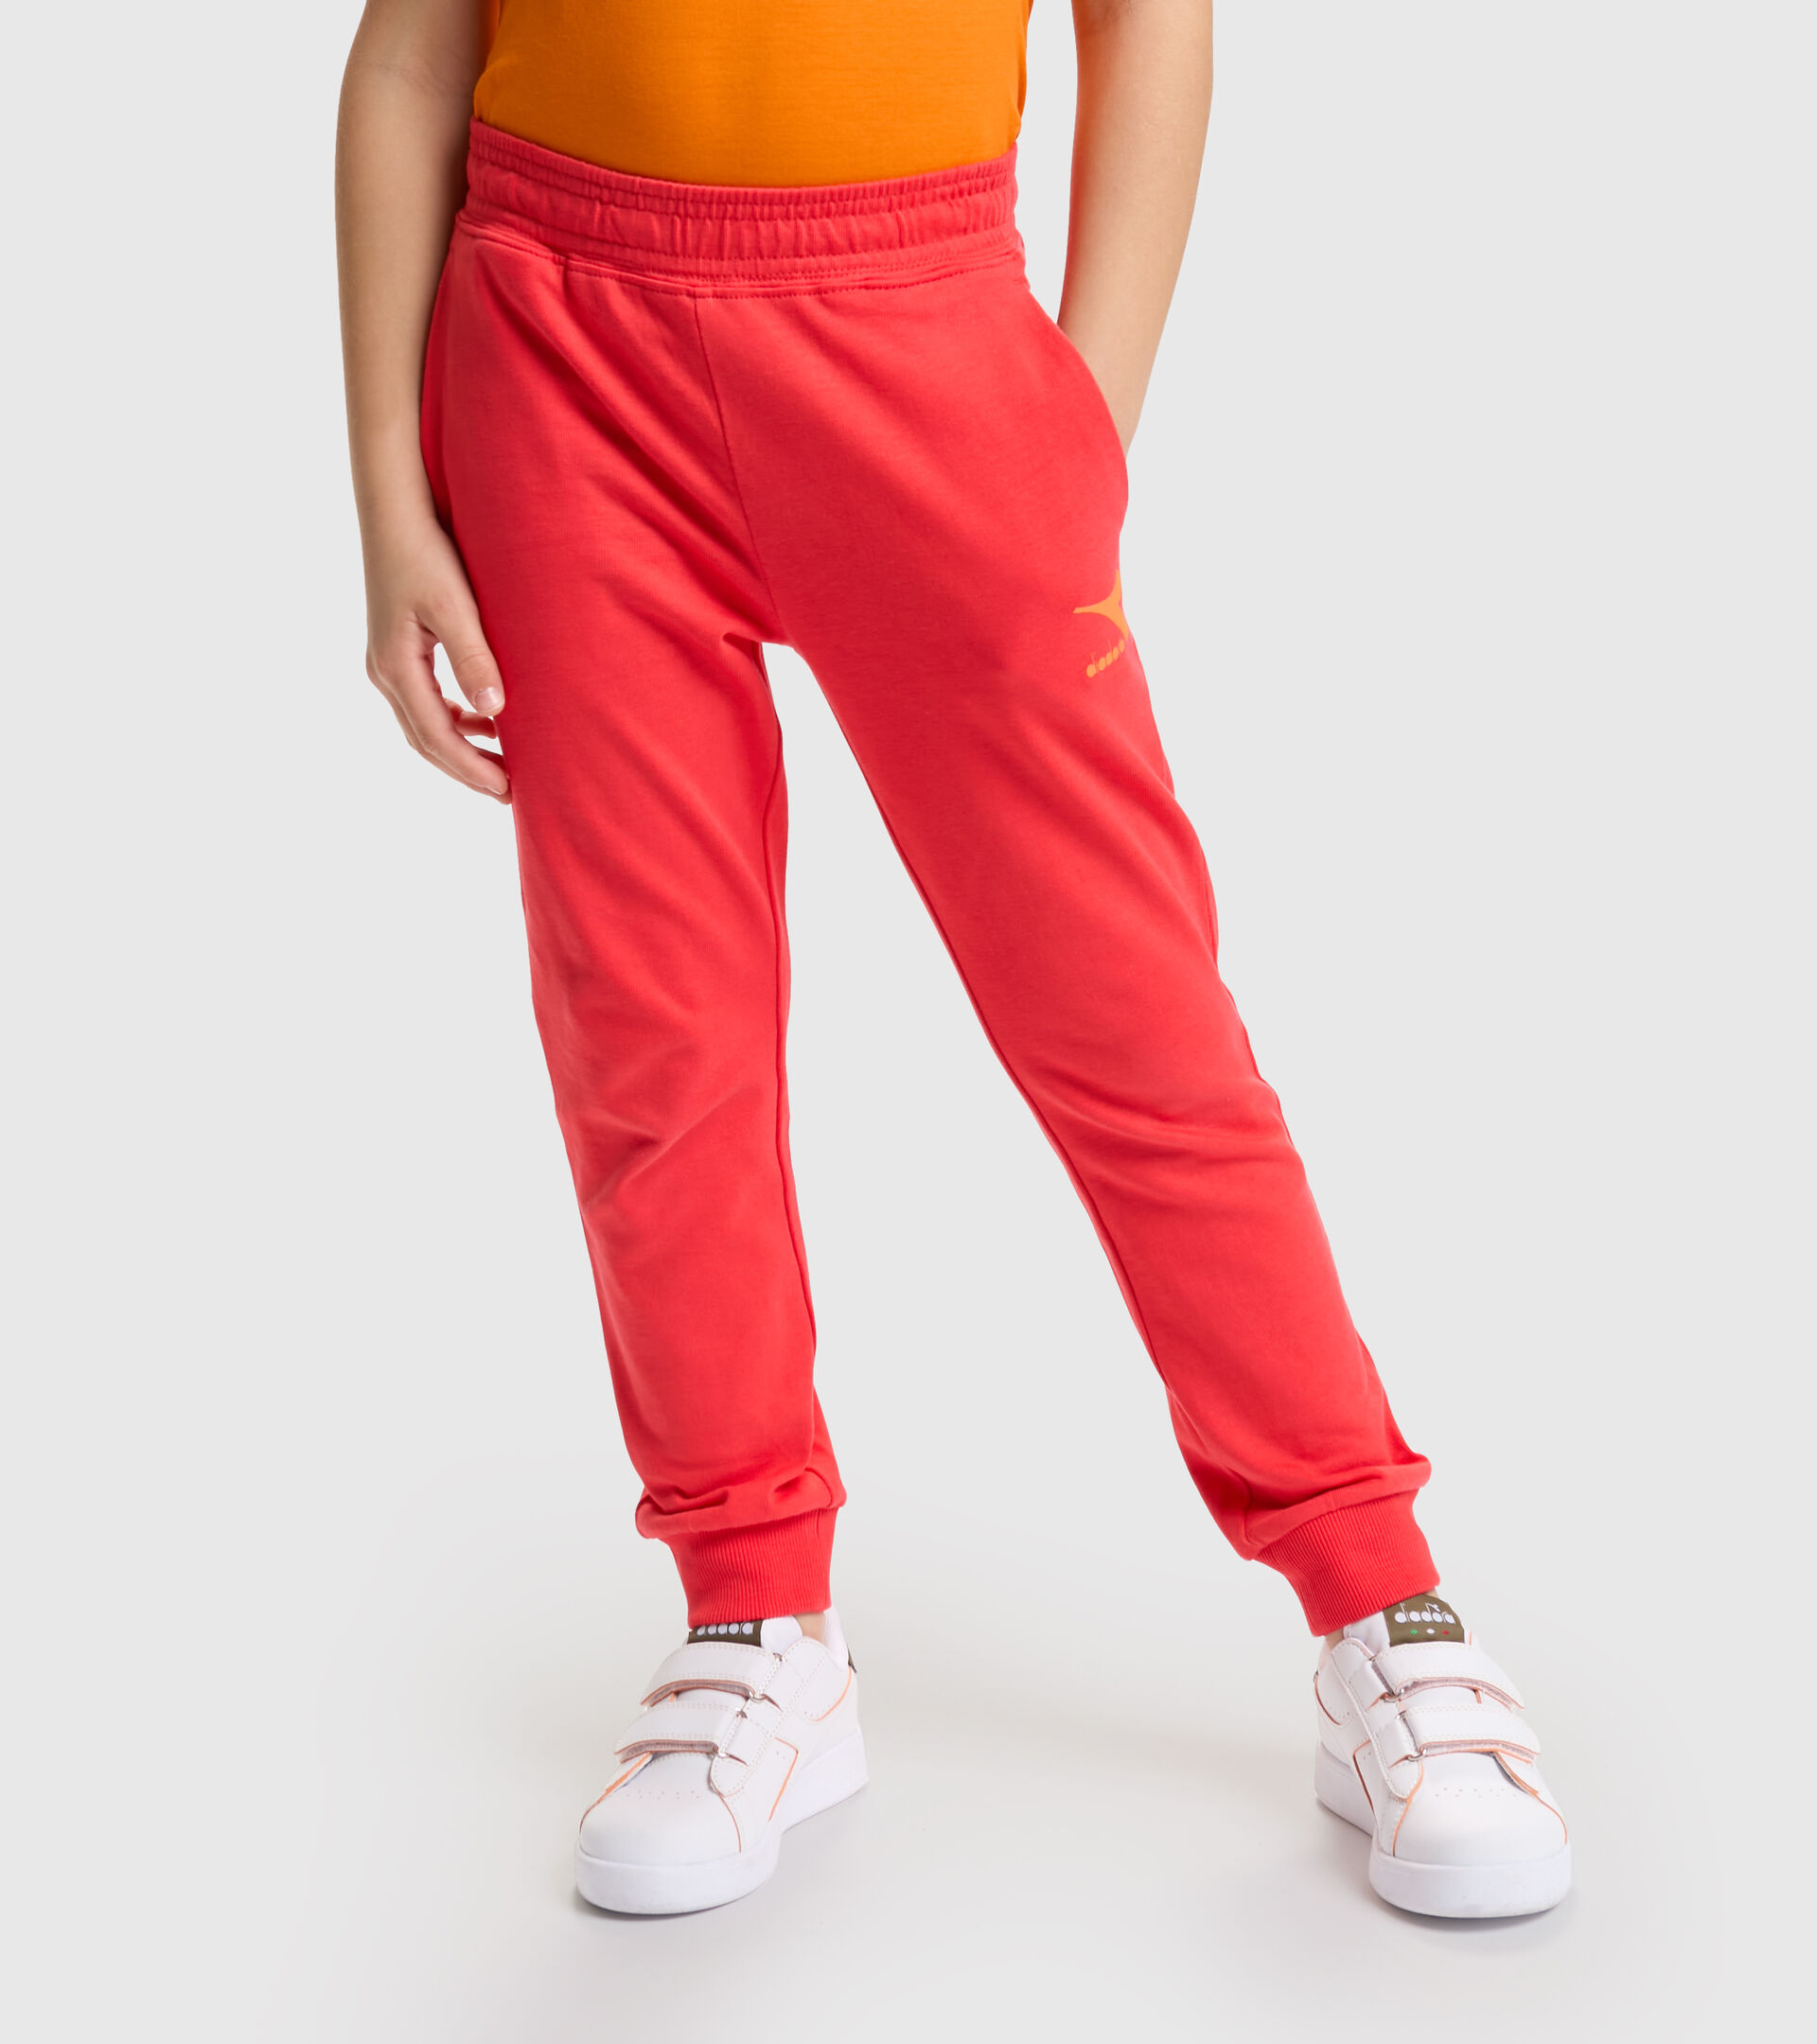 Cotton sports trousers - Unisex JU.CUFF PANTS RAINBOW POPPY RED - Diadora